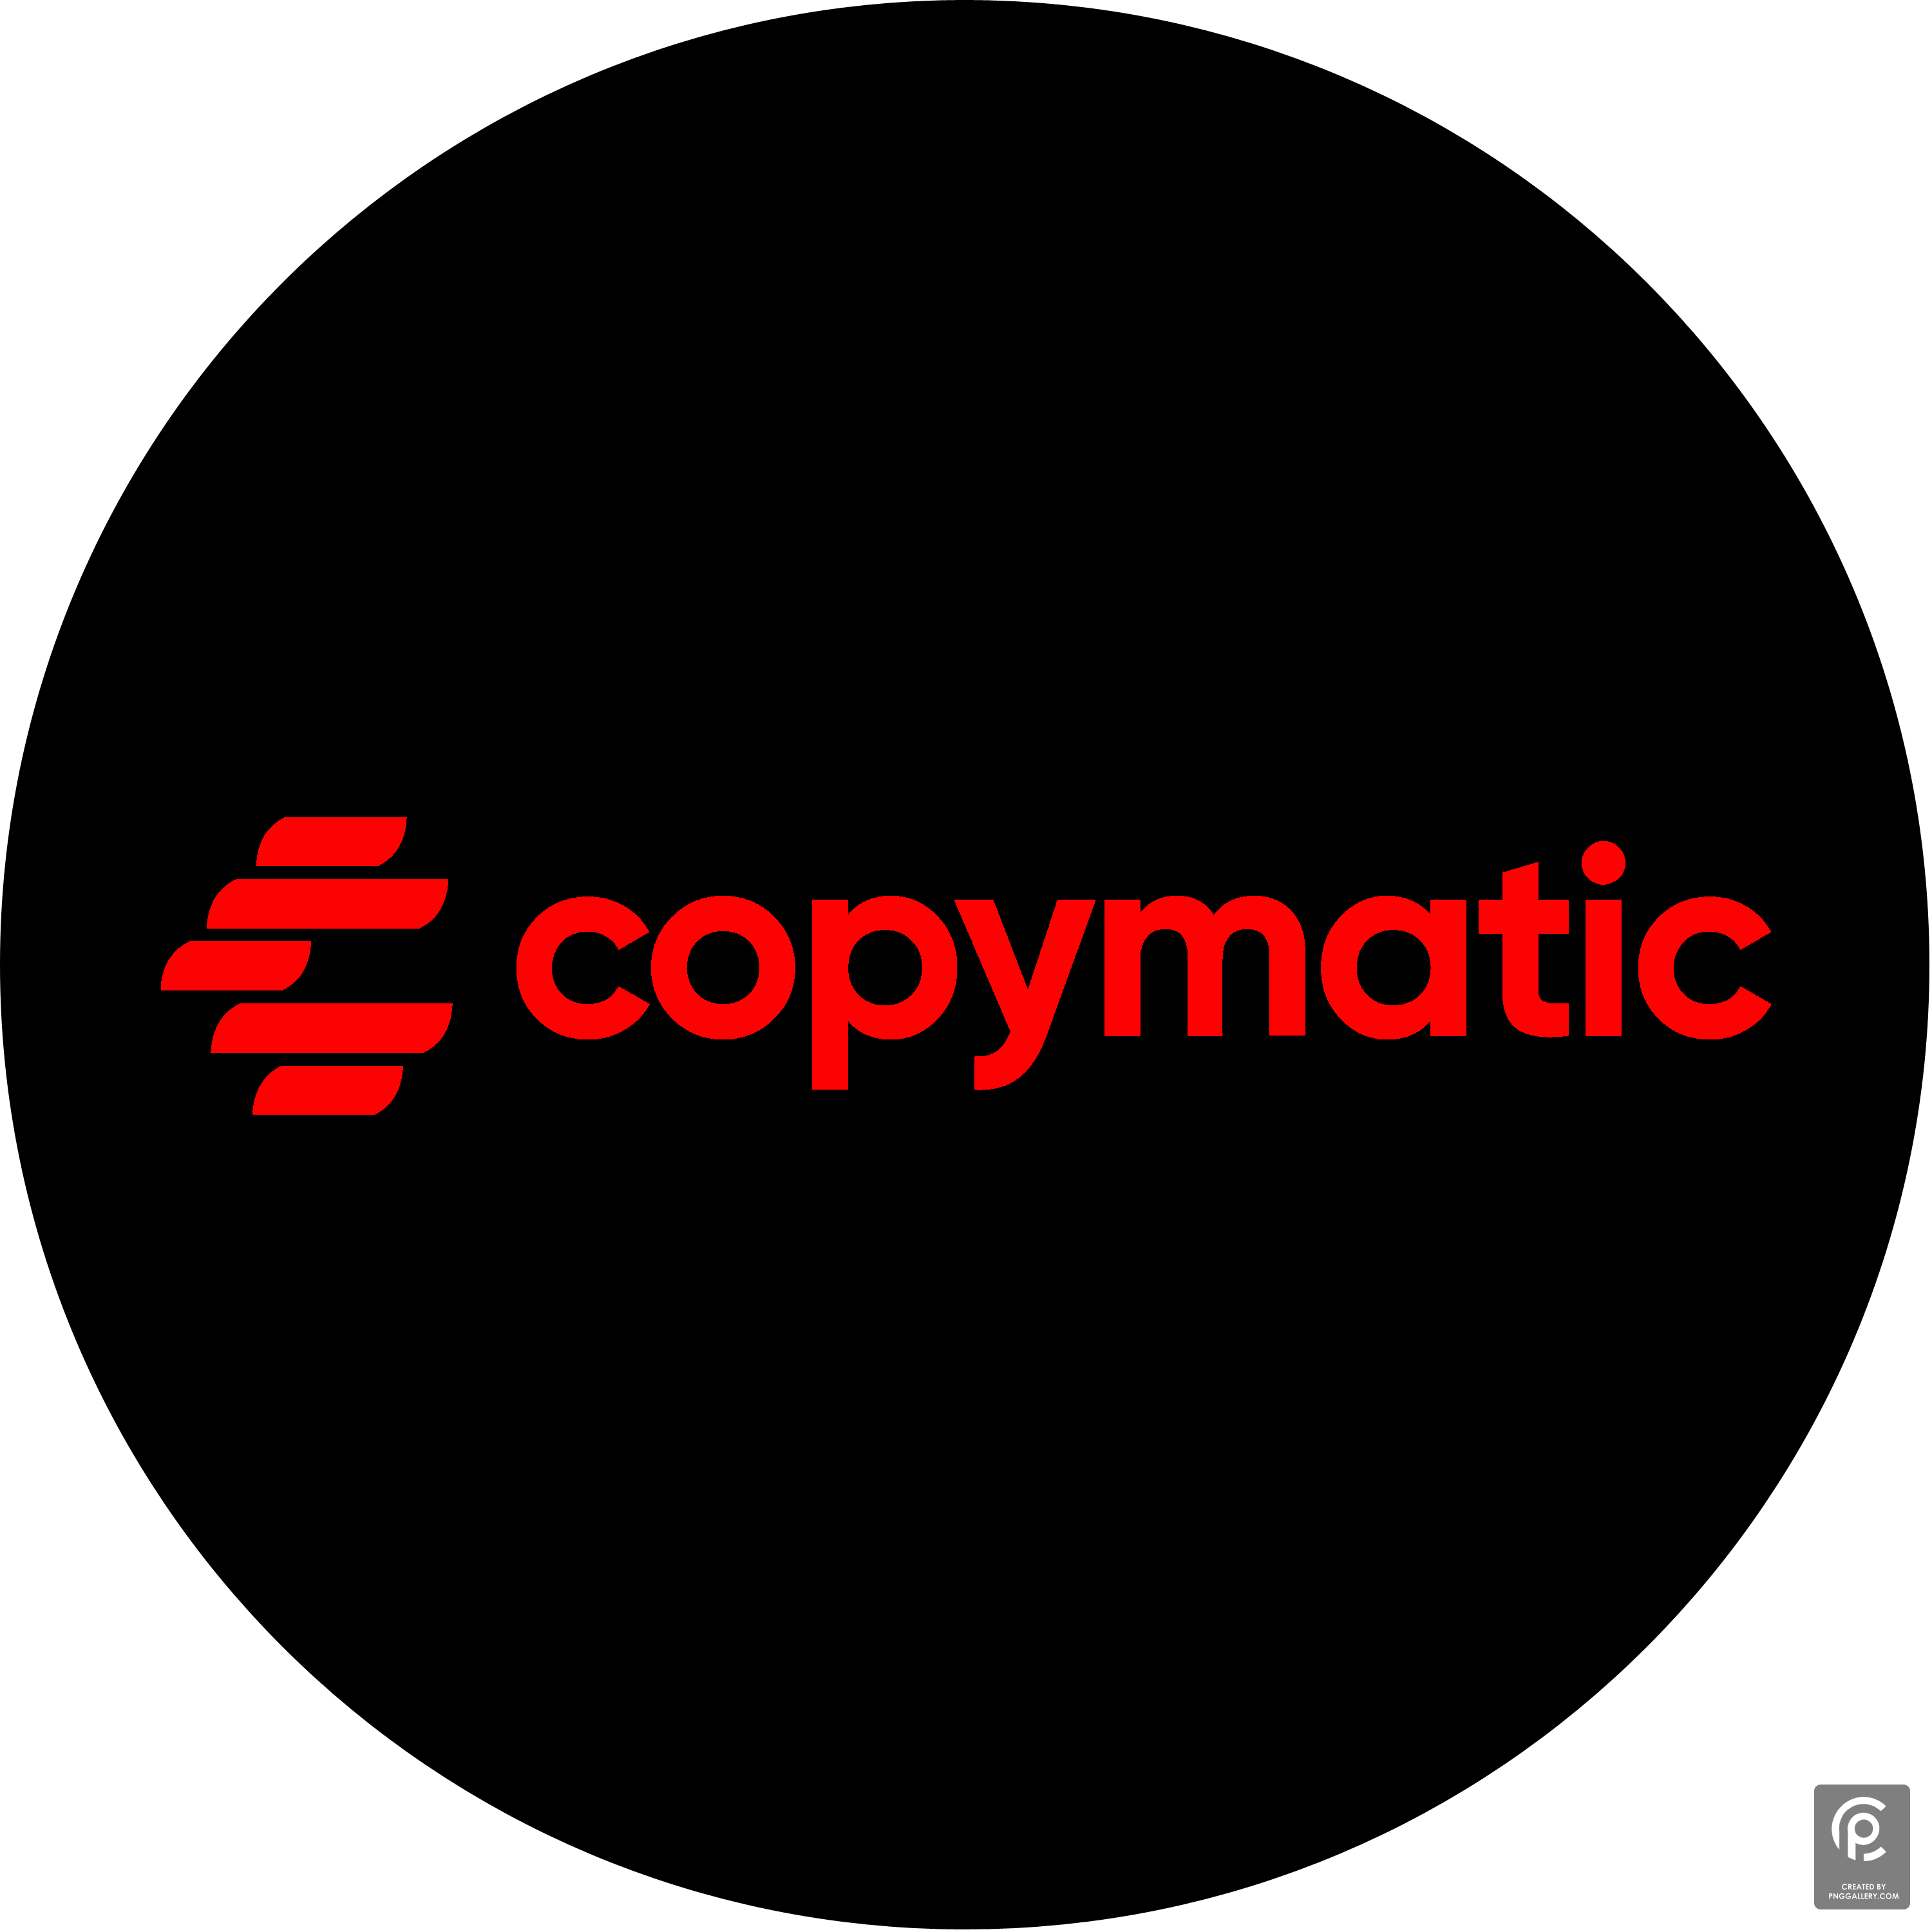 Copymatic Logo Transparent Gallery